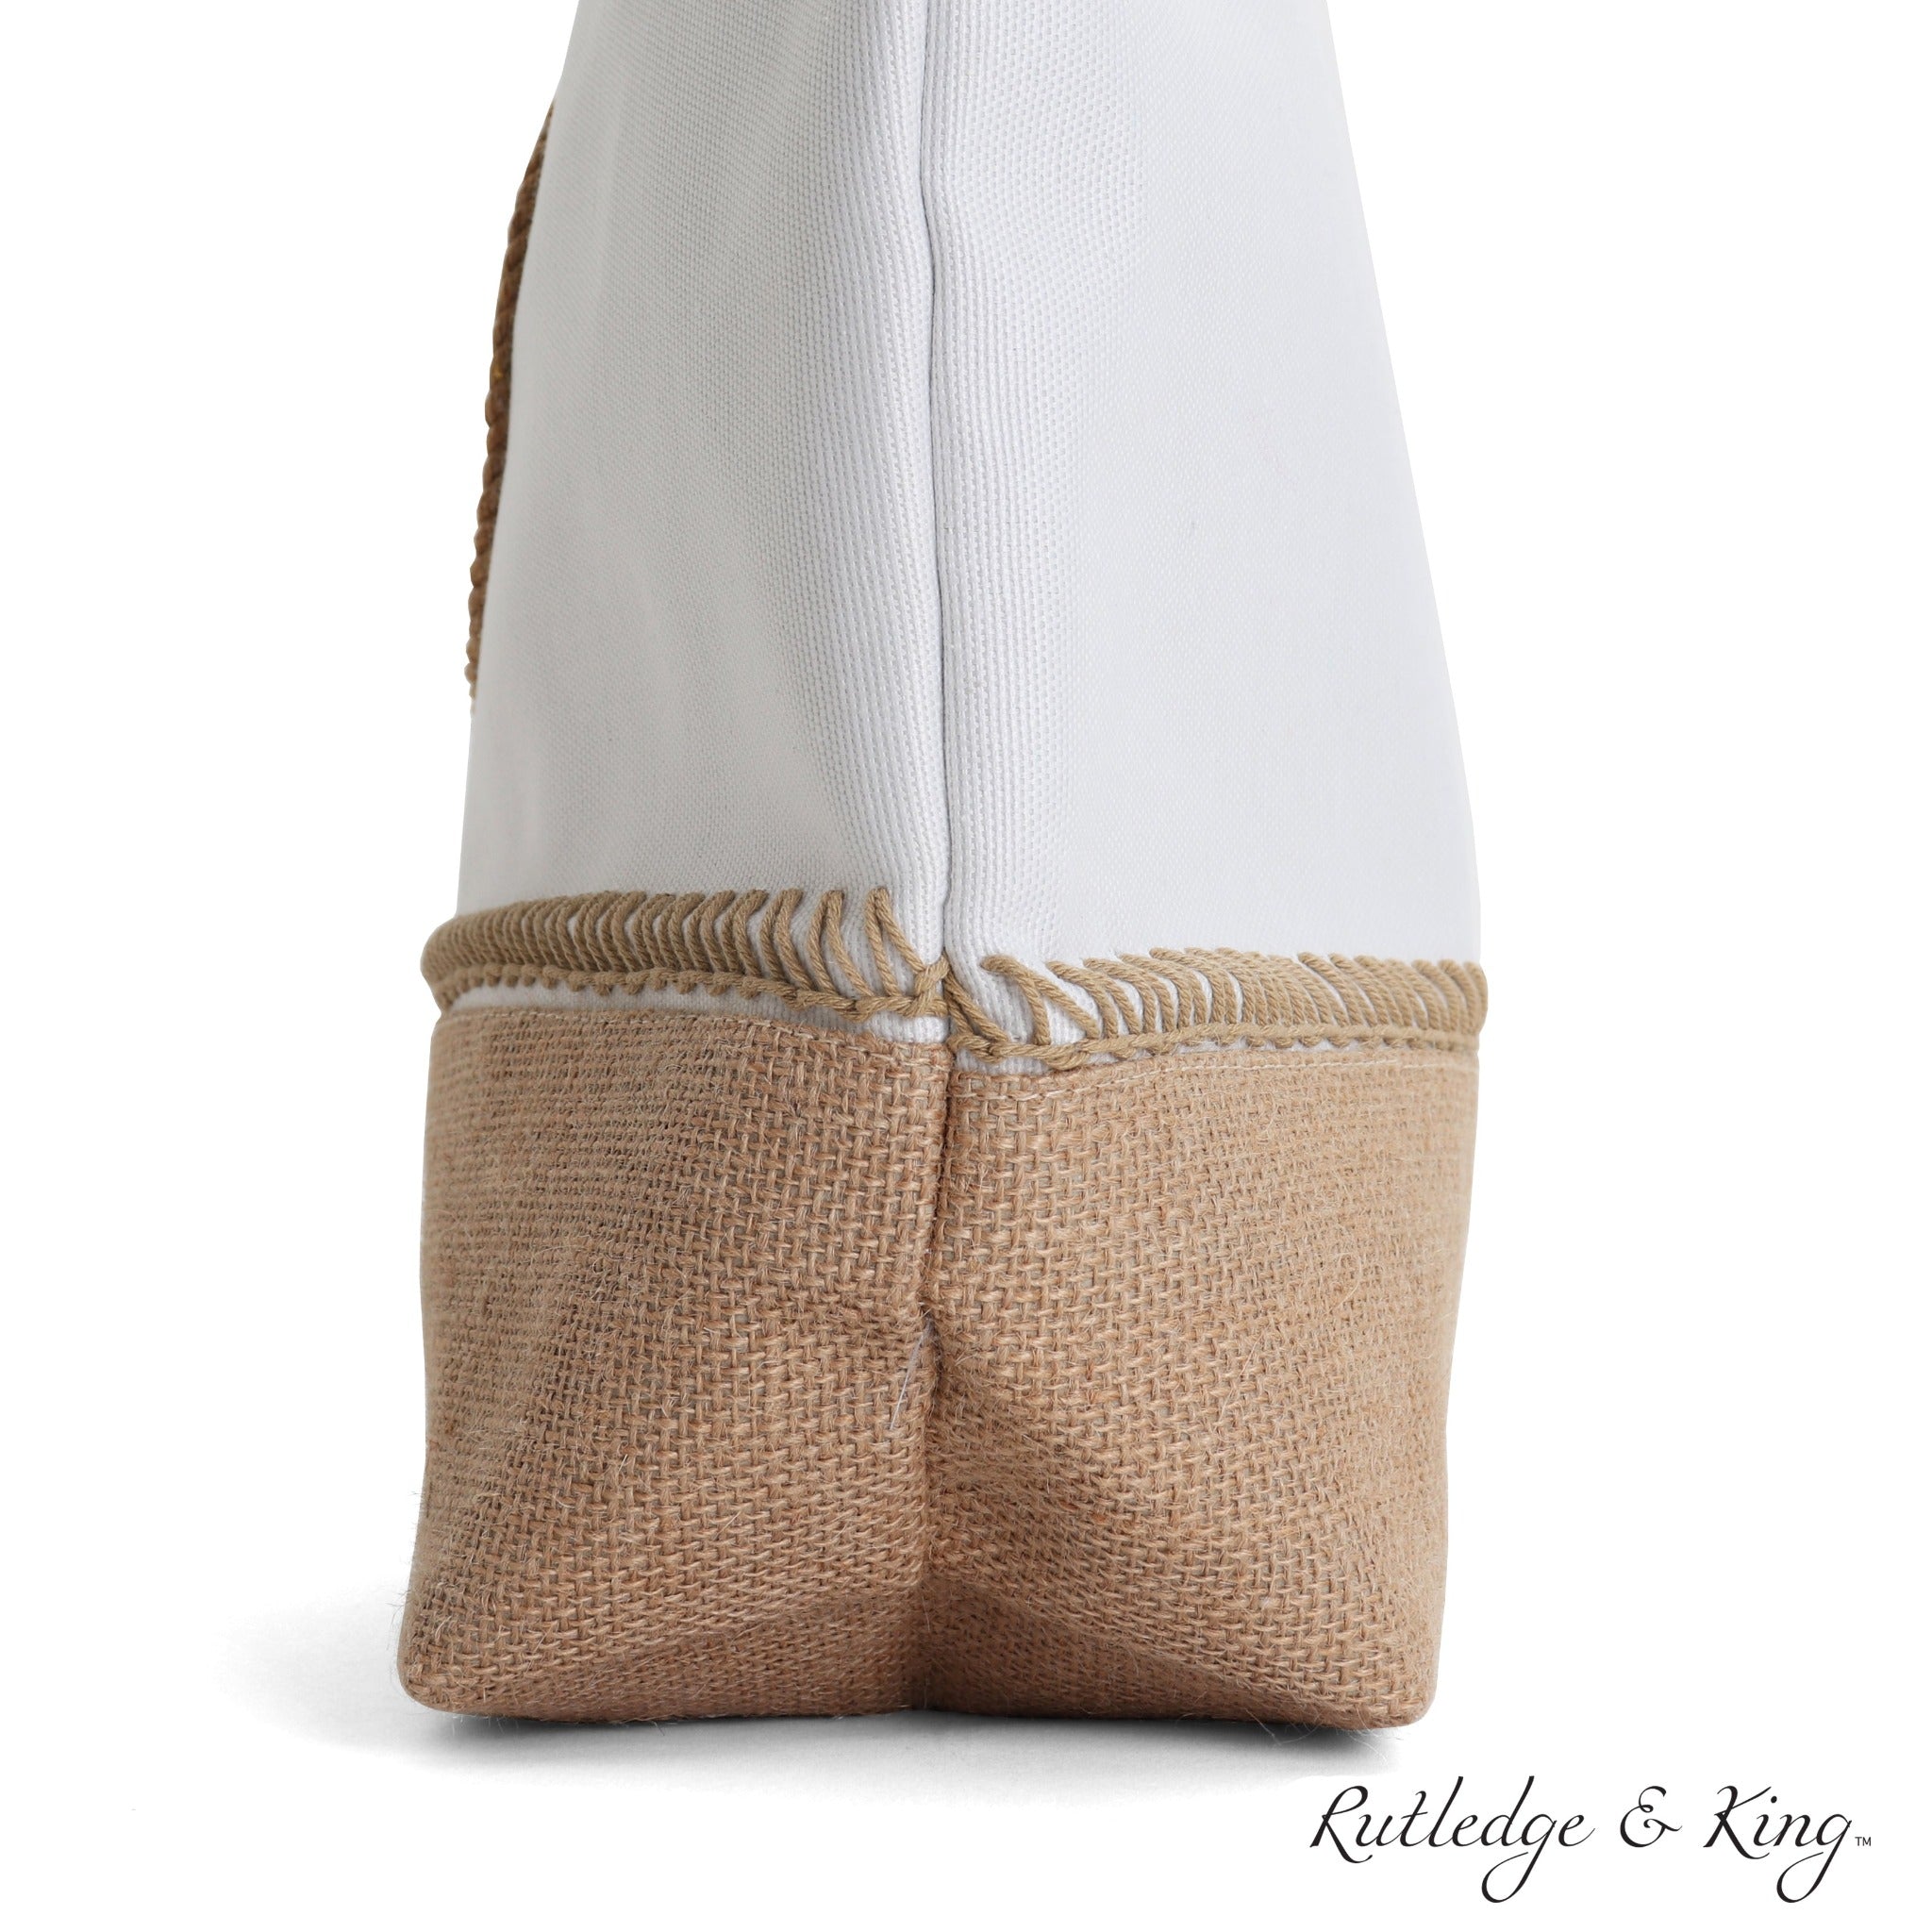 Rutledge & King Starfish Beach Bag - Large Tote Bag with Rope Handles 